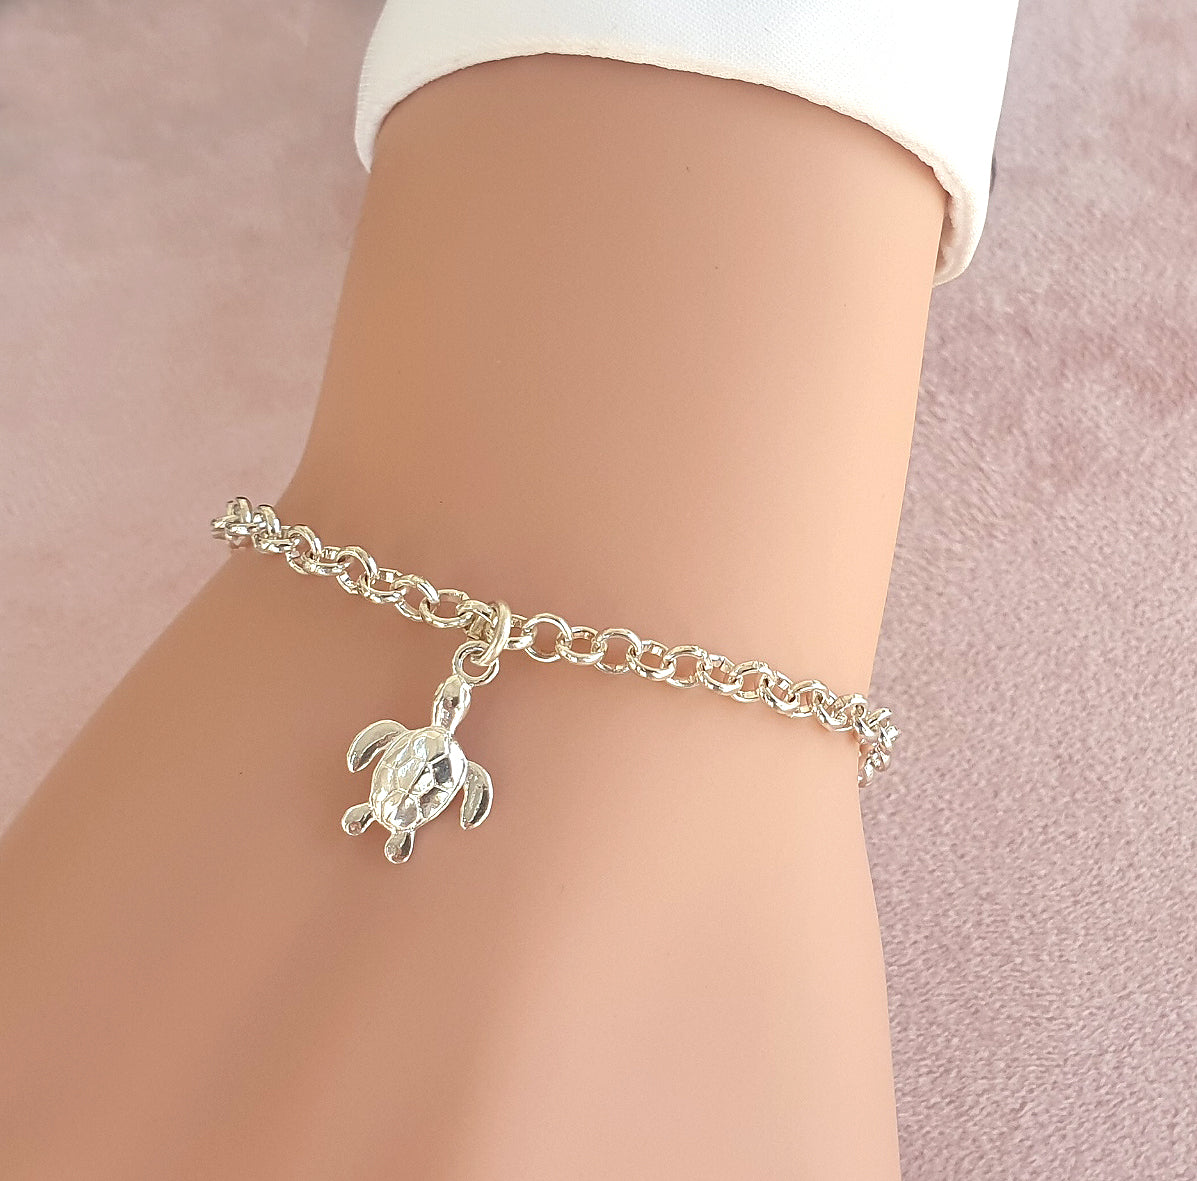 Charmed Turtle Link Bracelet, Adjustable for Women and Girl's